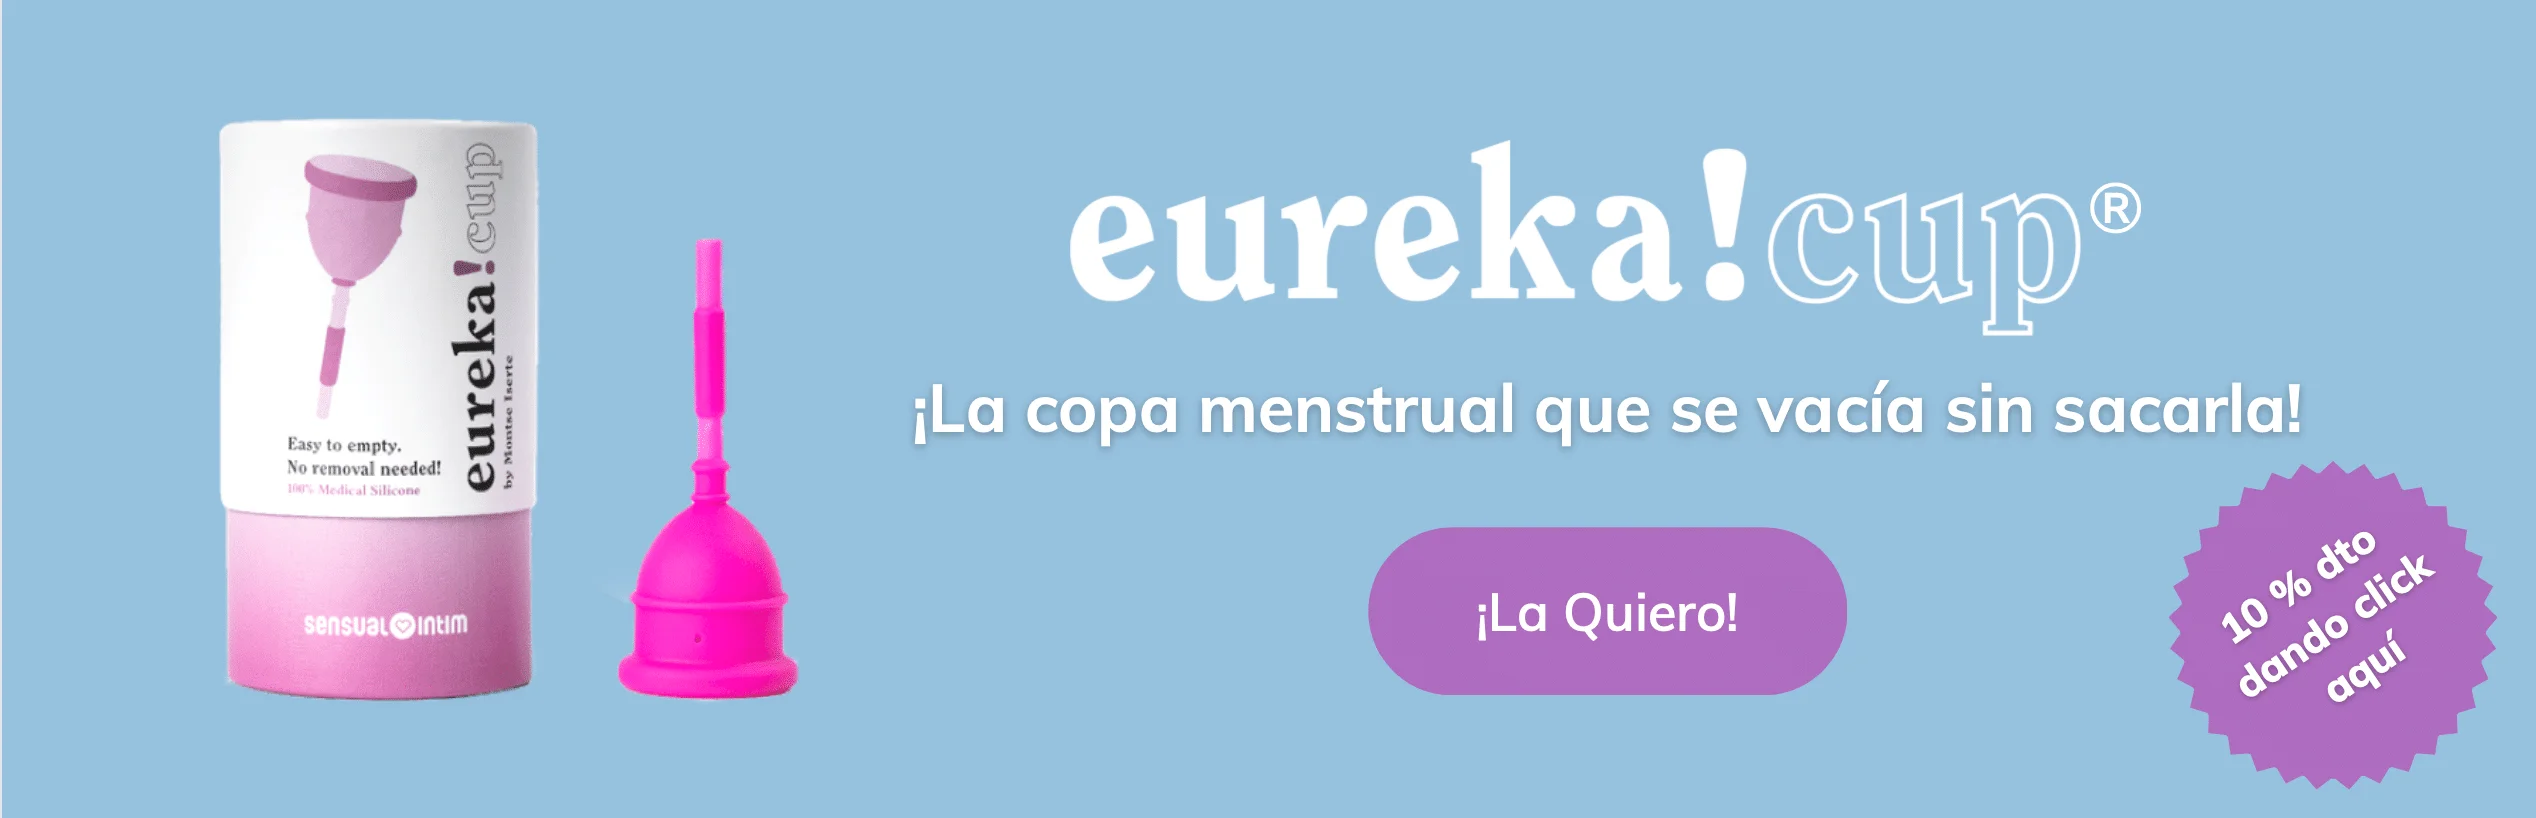 descuento eureka cup | blog sensual intim